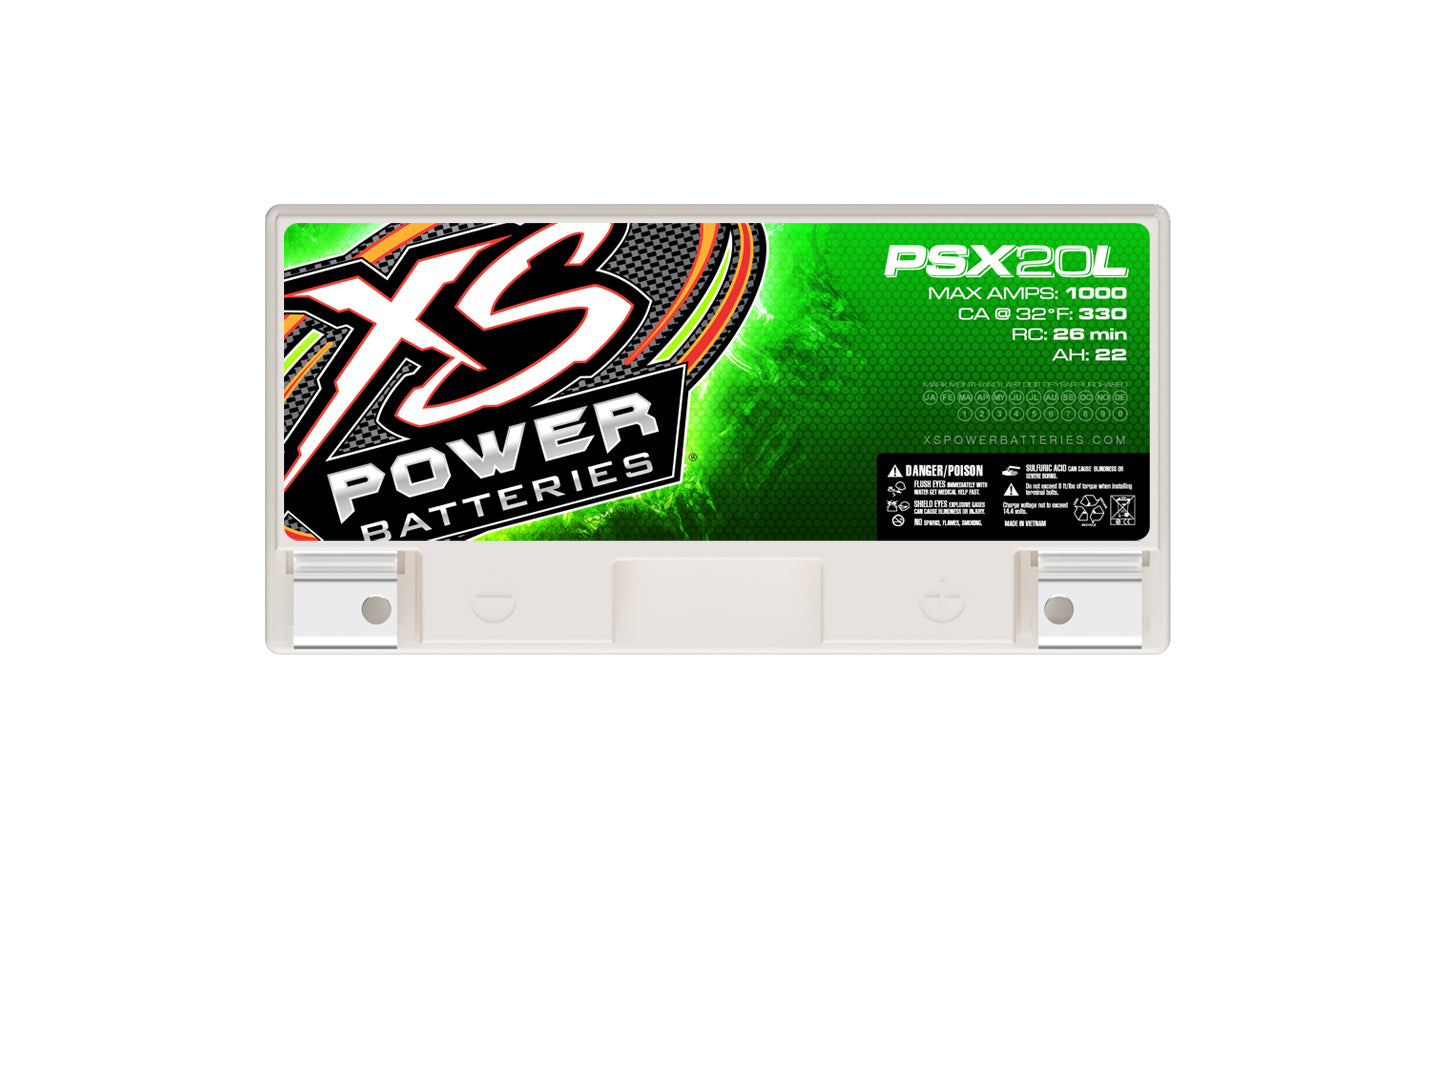 PSX20L XS Power 12VDC Group 20L AGM Powersports Vehicle Battery 1000A 22Ah